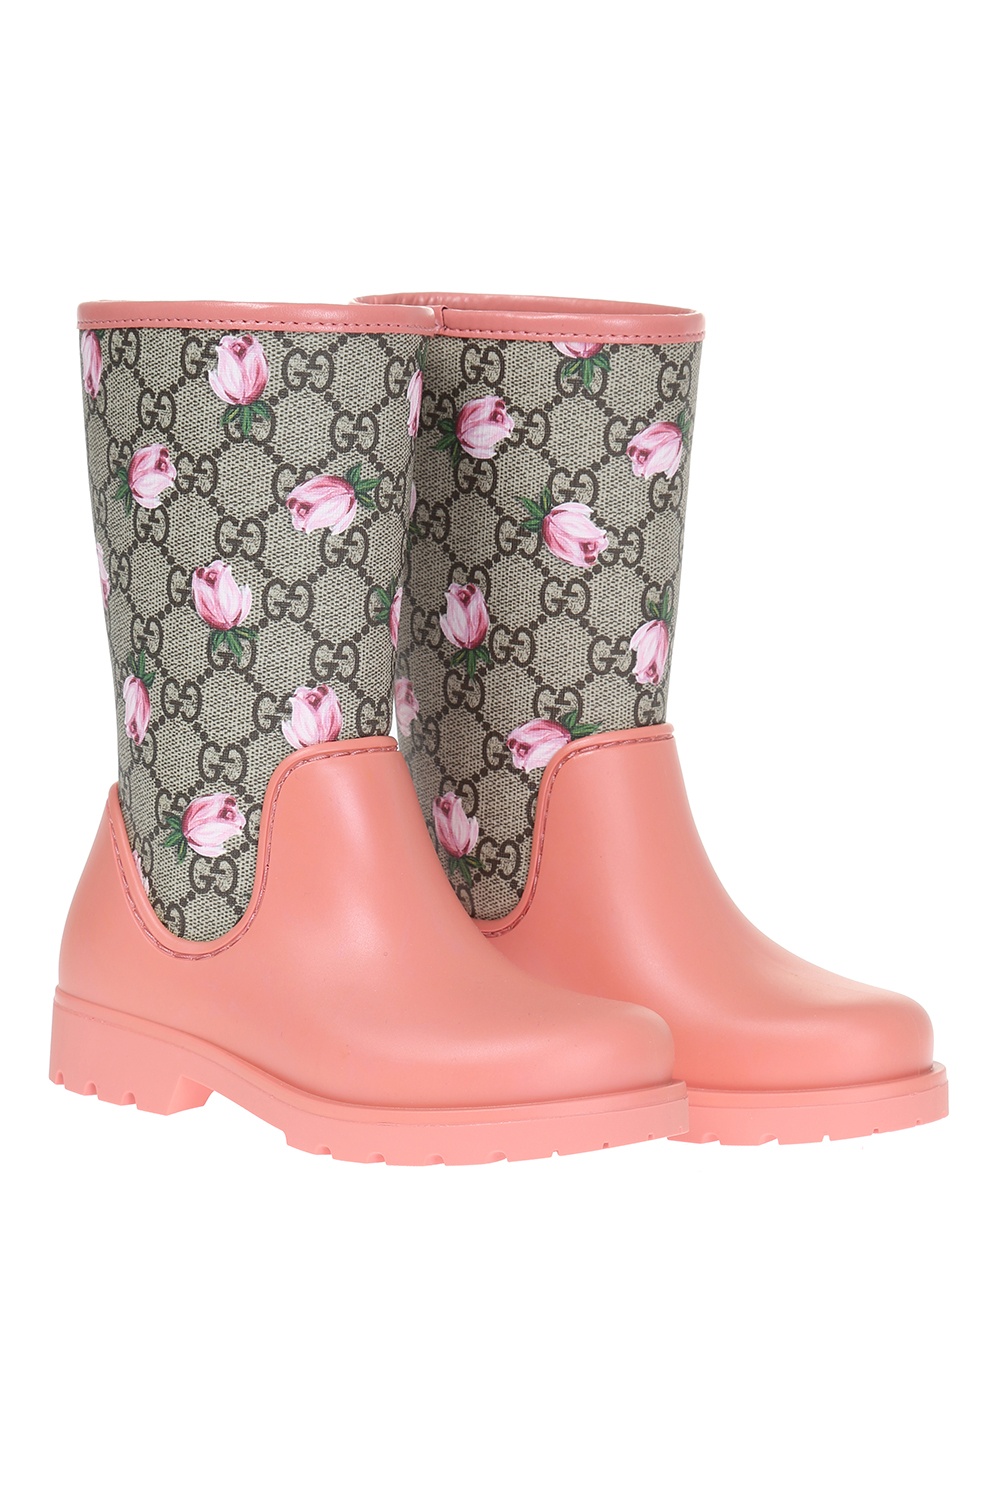 Gucci Rain Boots